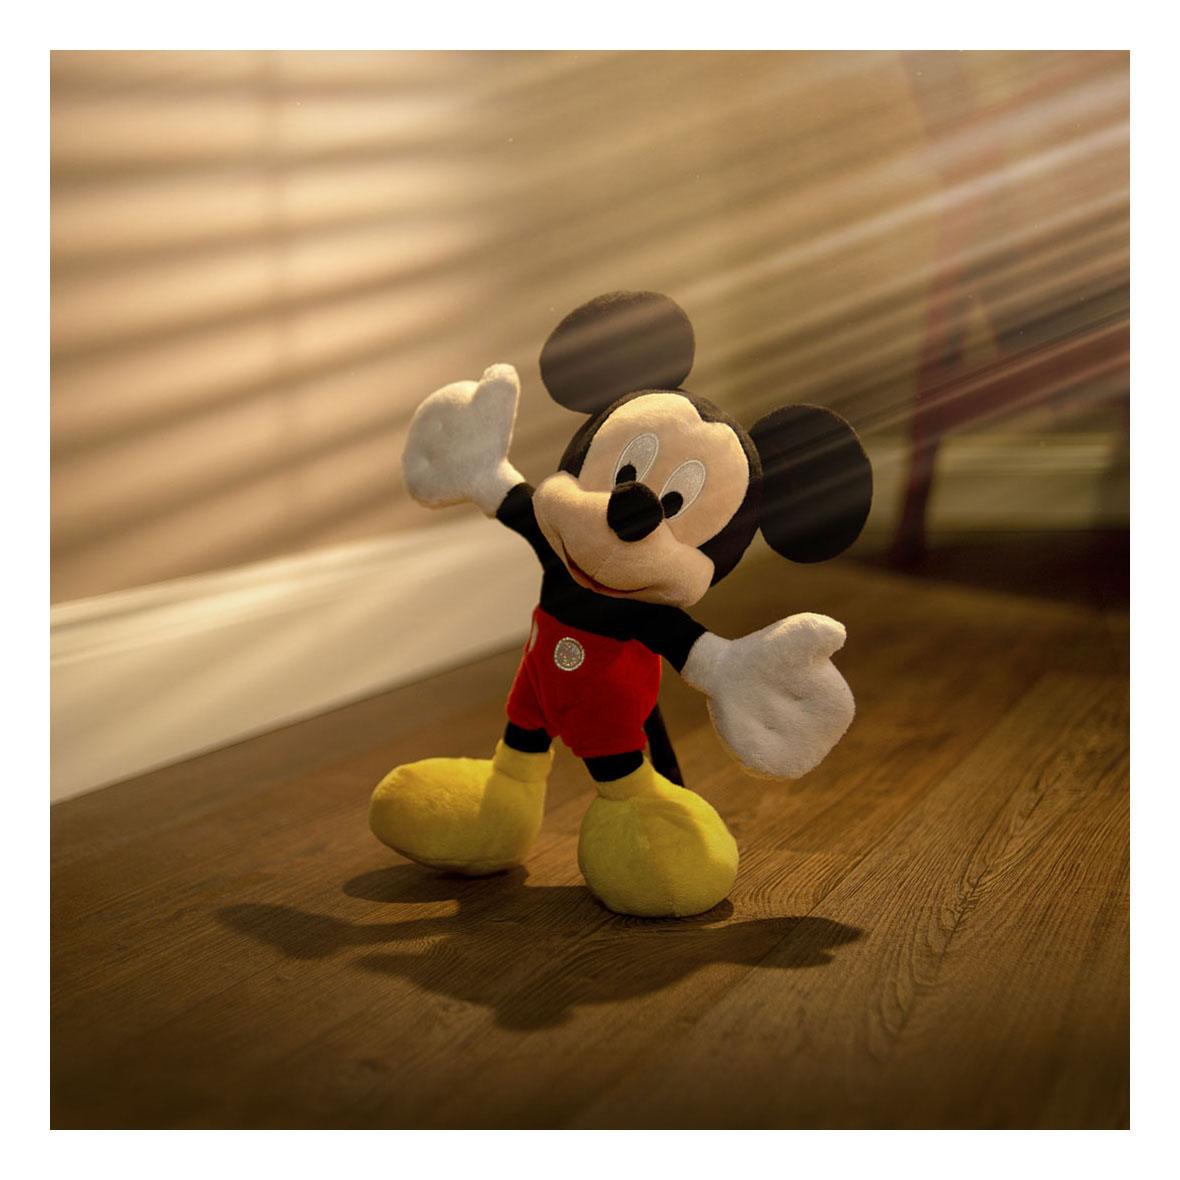 Disney peluche peluche Mickey Mouse, 25 cm